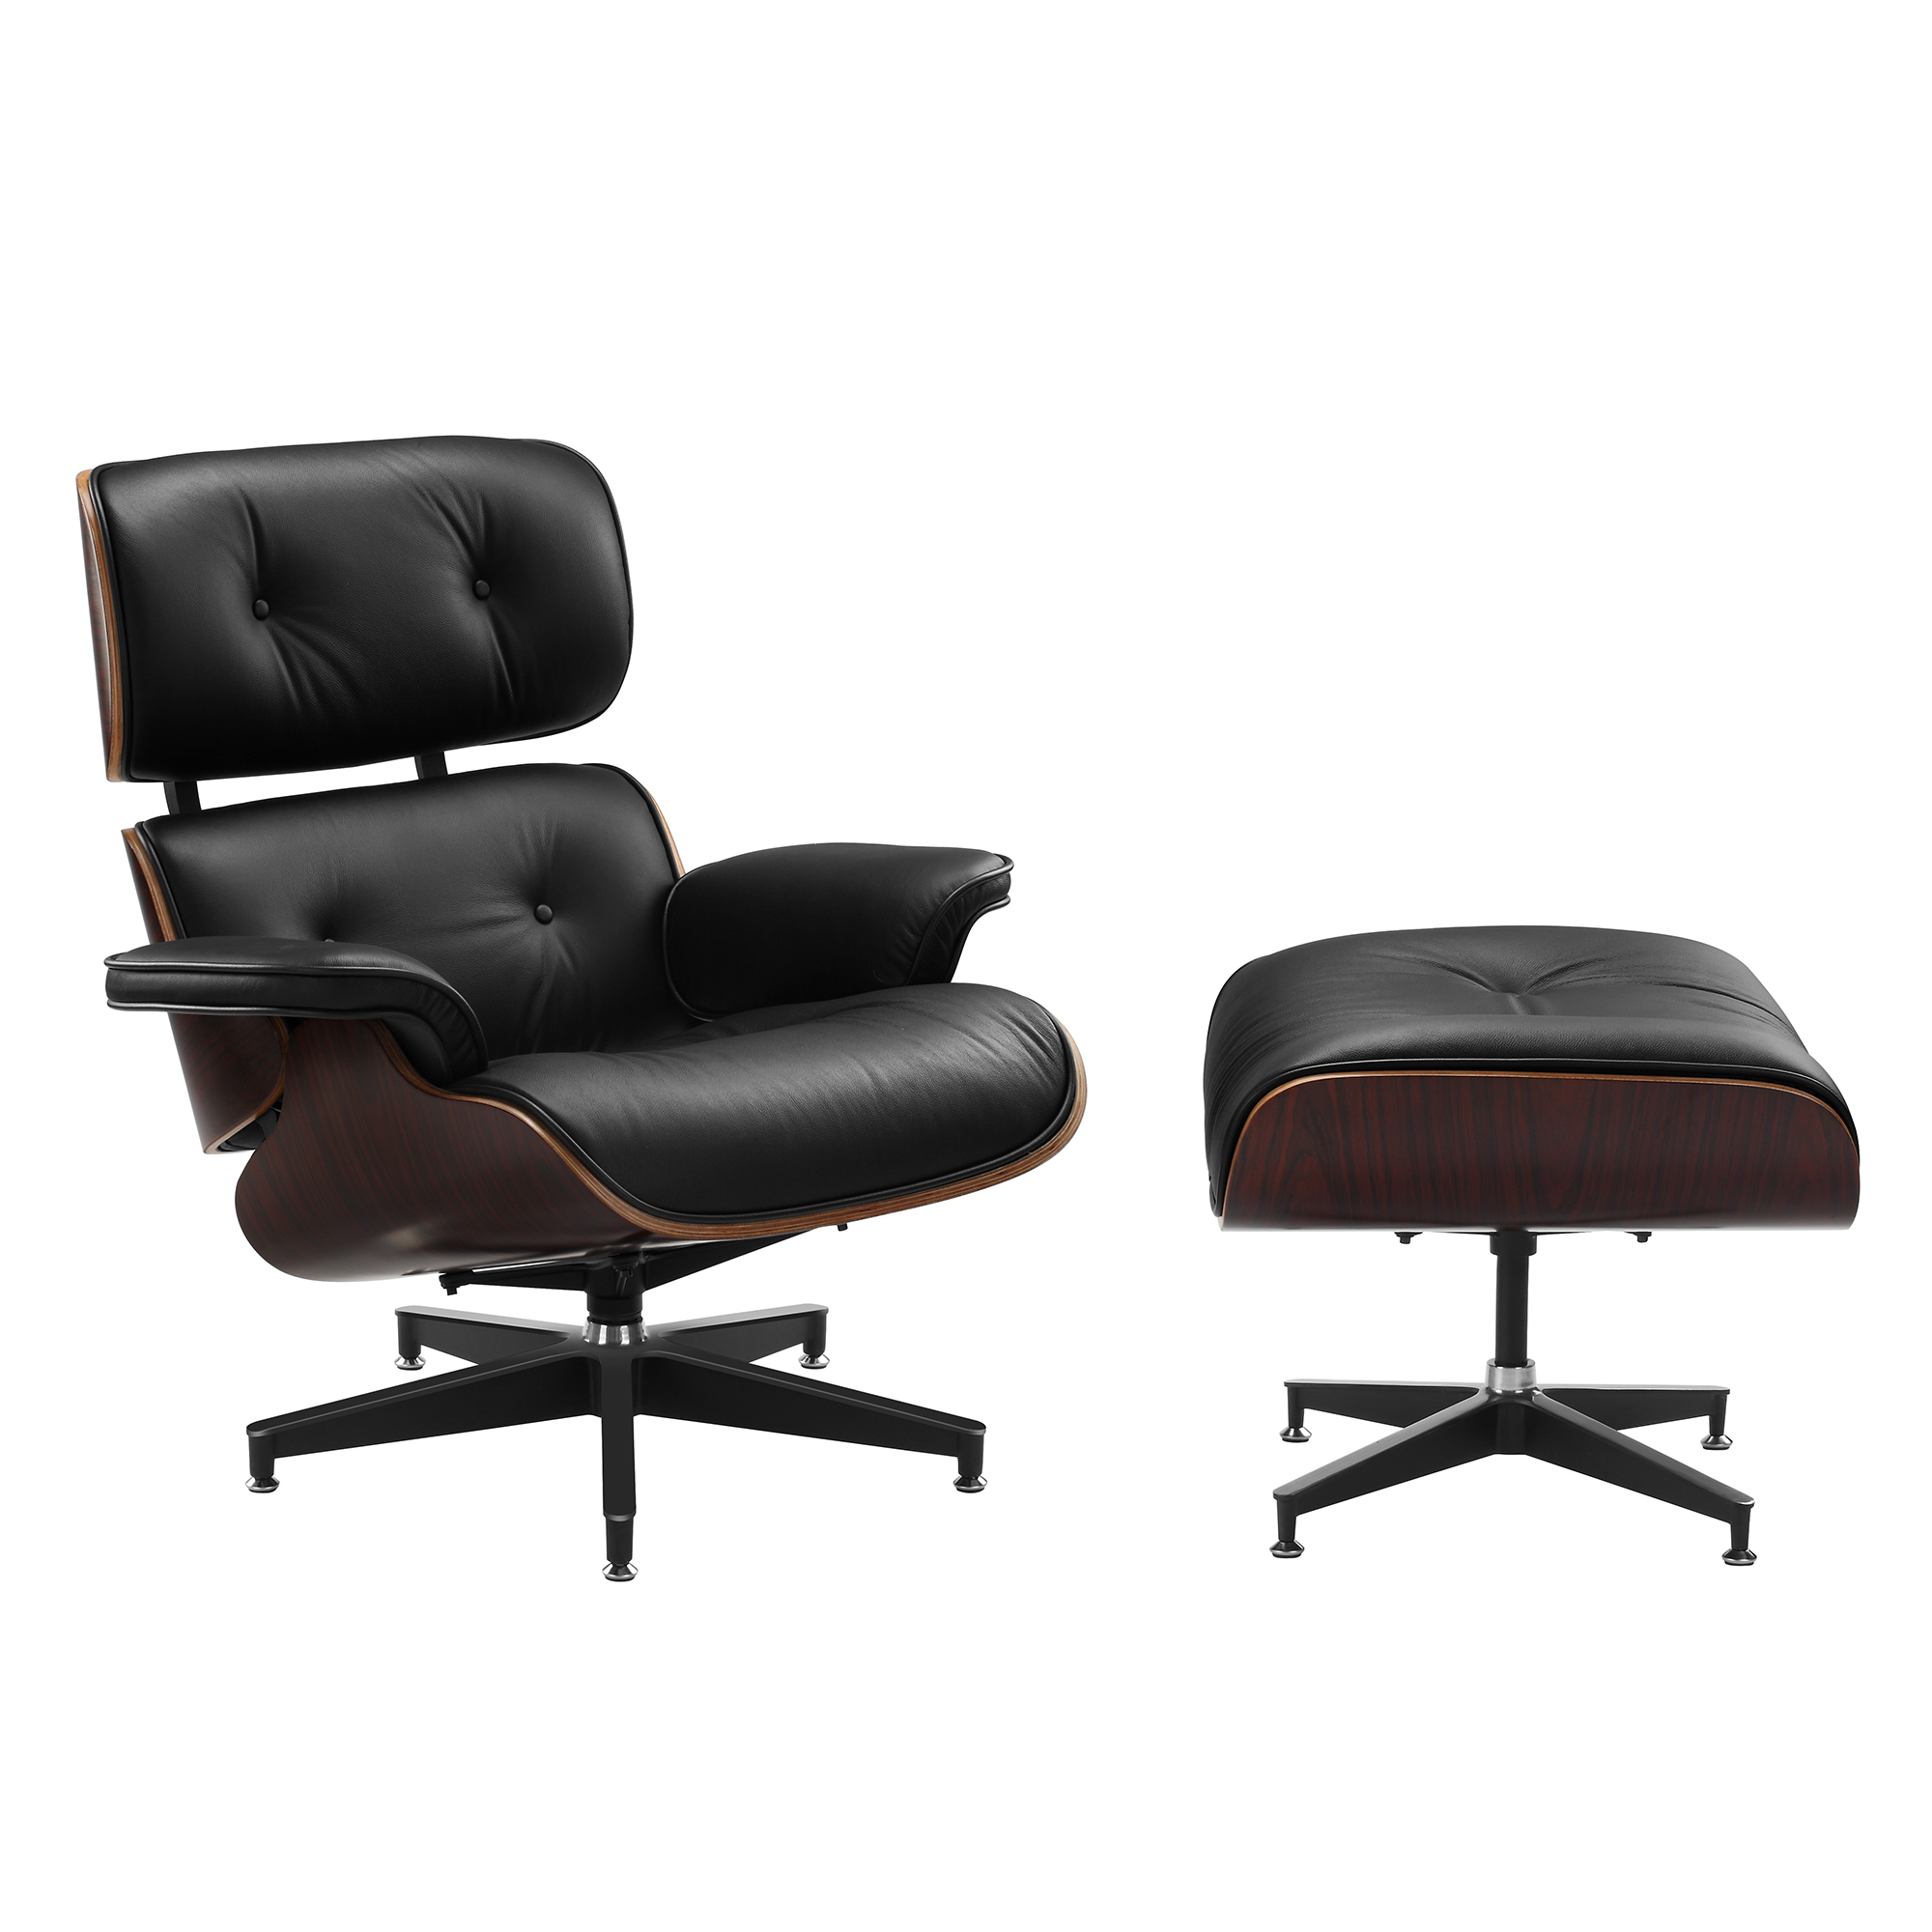 NEW Eames Premium Leather Replica Lounge Chair & Ottoman | eBay